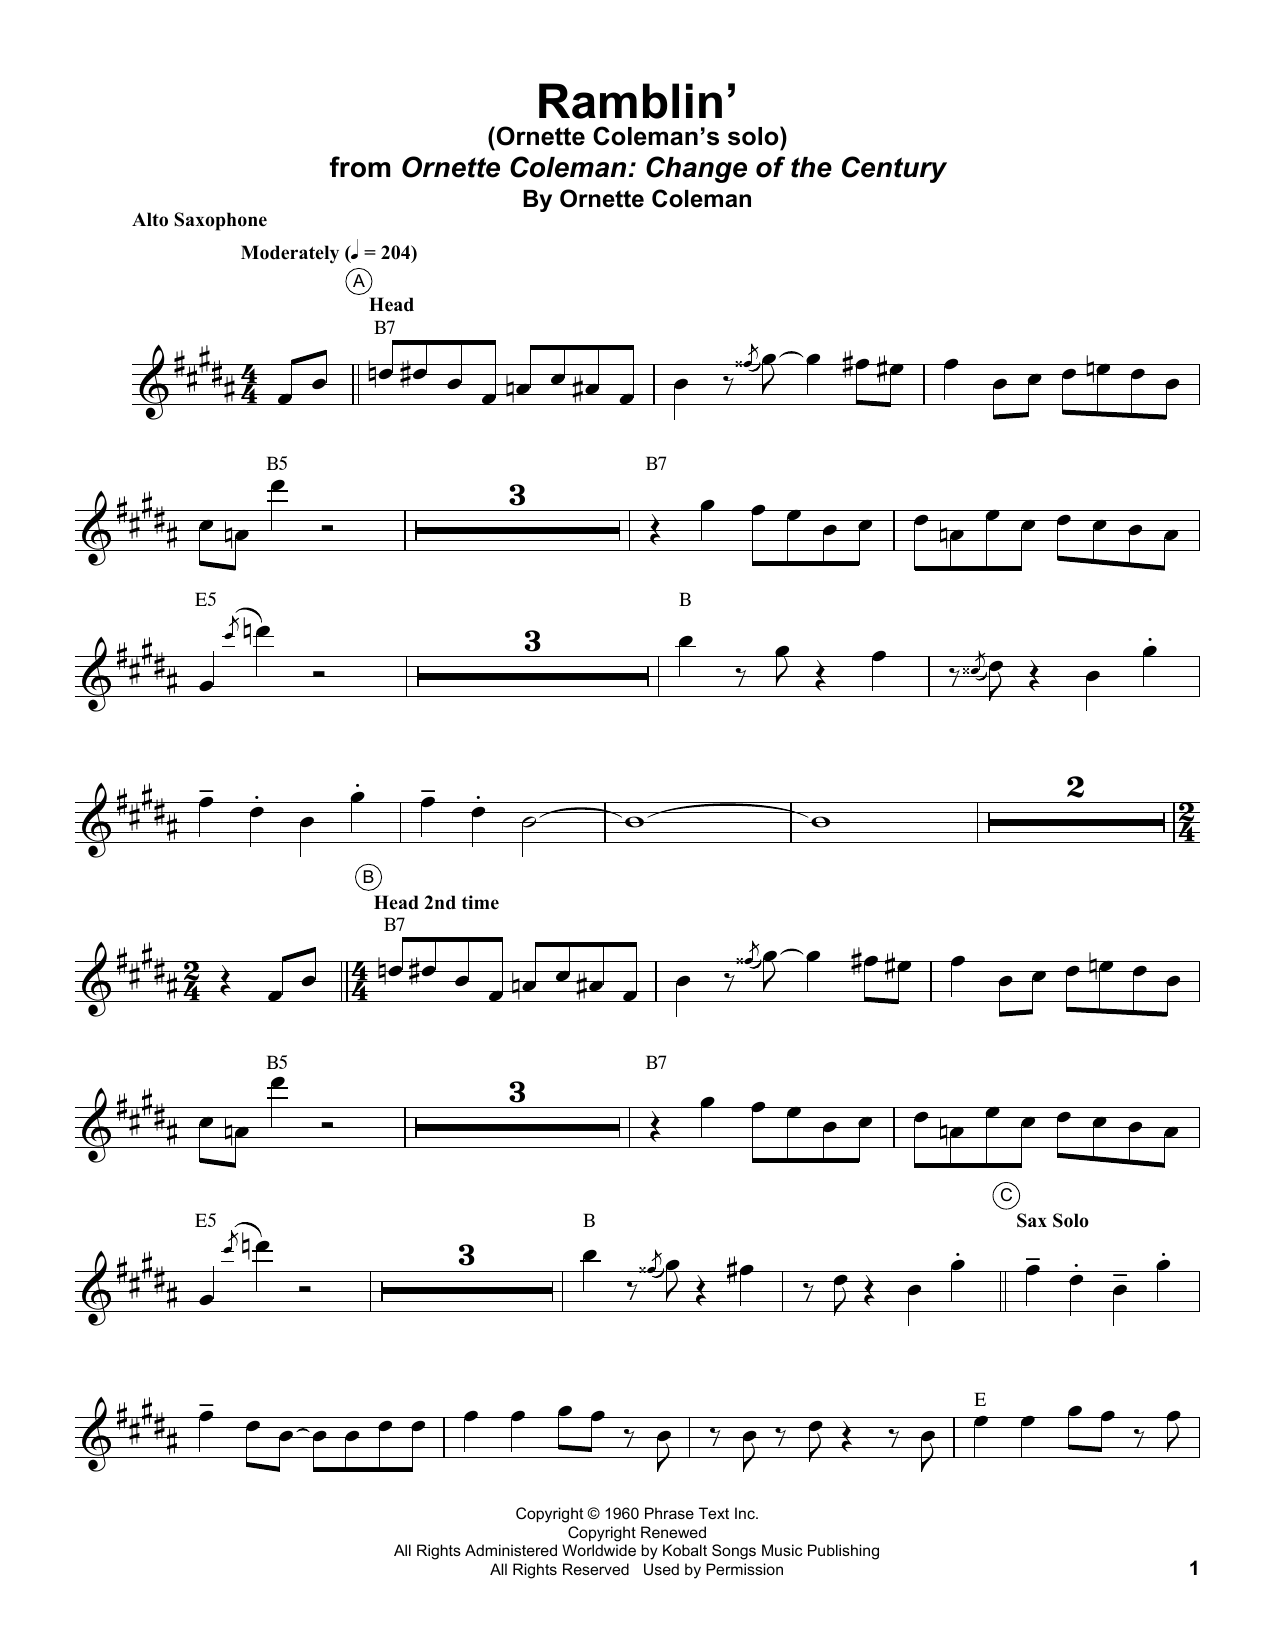 Ornette Coleman Ramblin' Sheet Music Notes & Chords for Alto Sax Transcription - Download or Print PDF